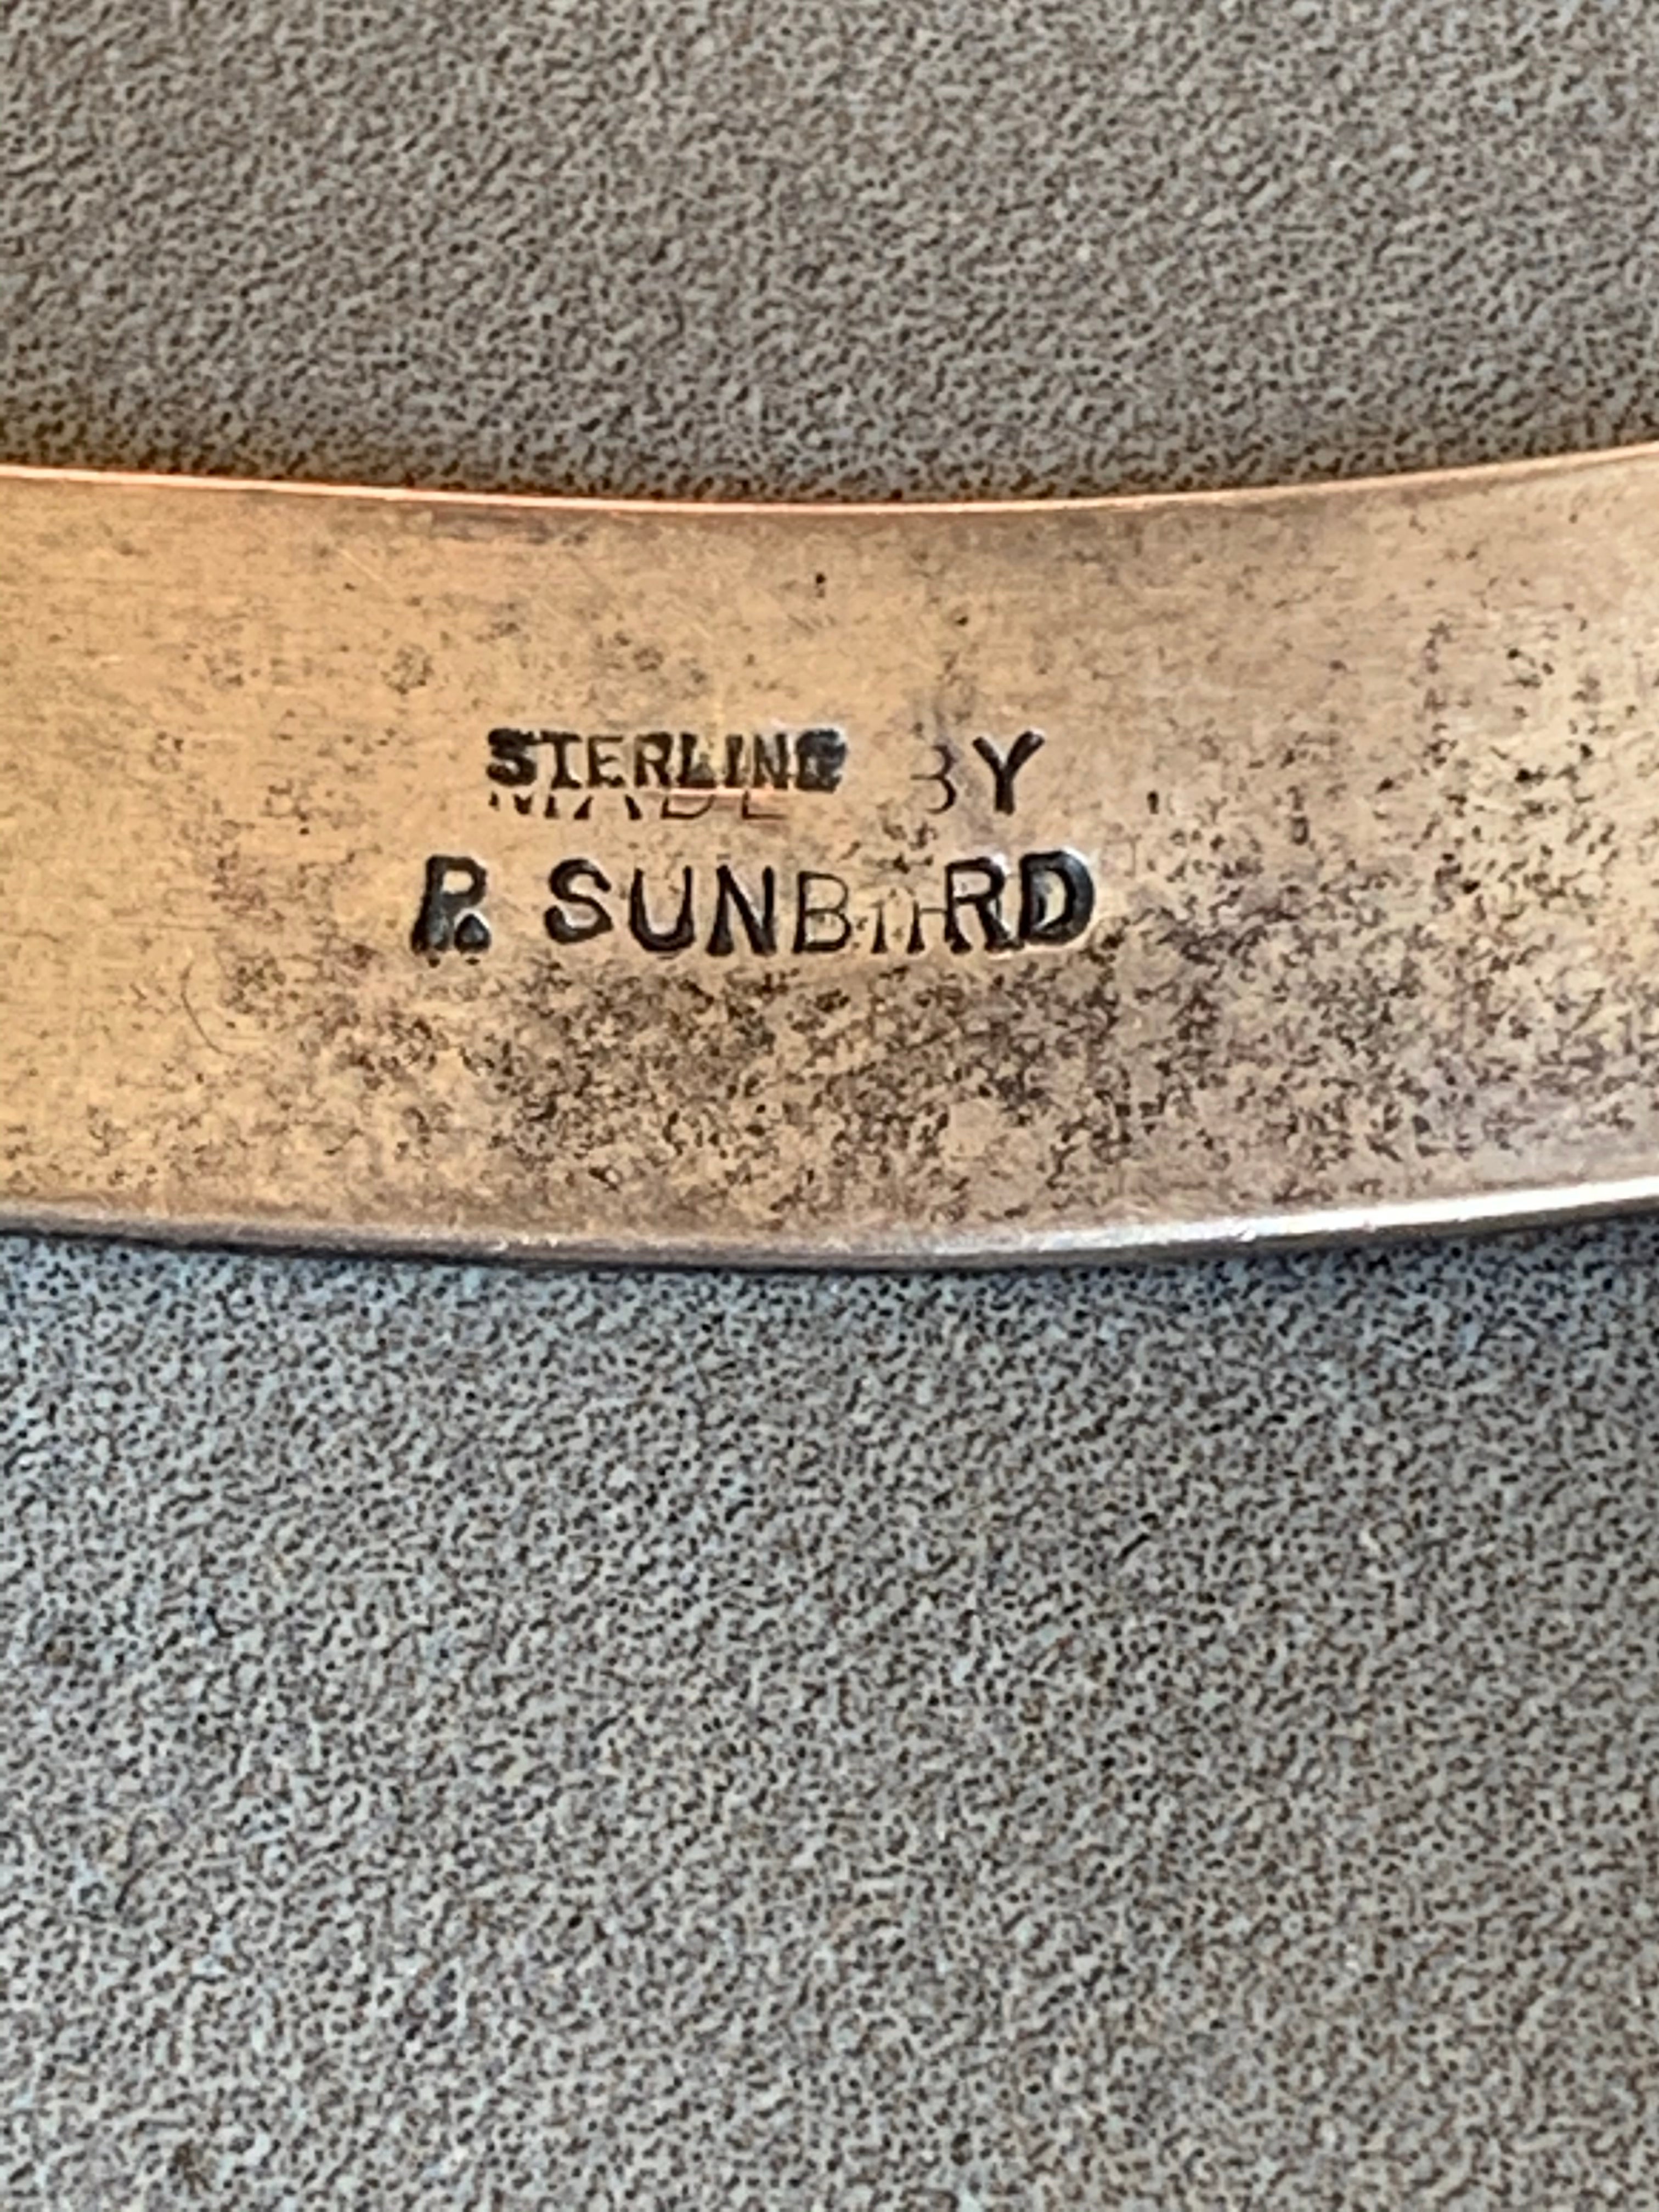 P. Sunbird Sterling Bracelet